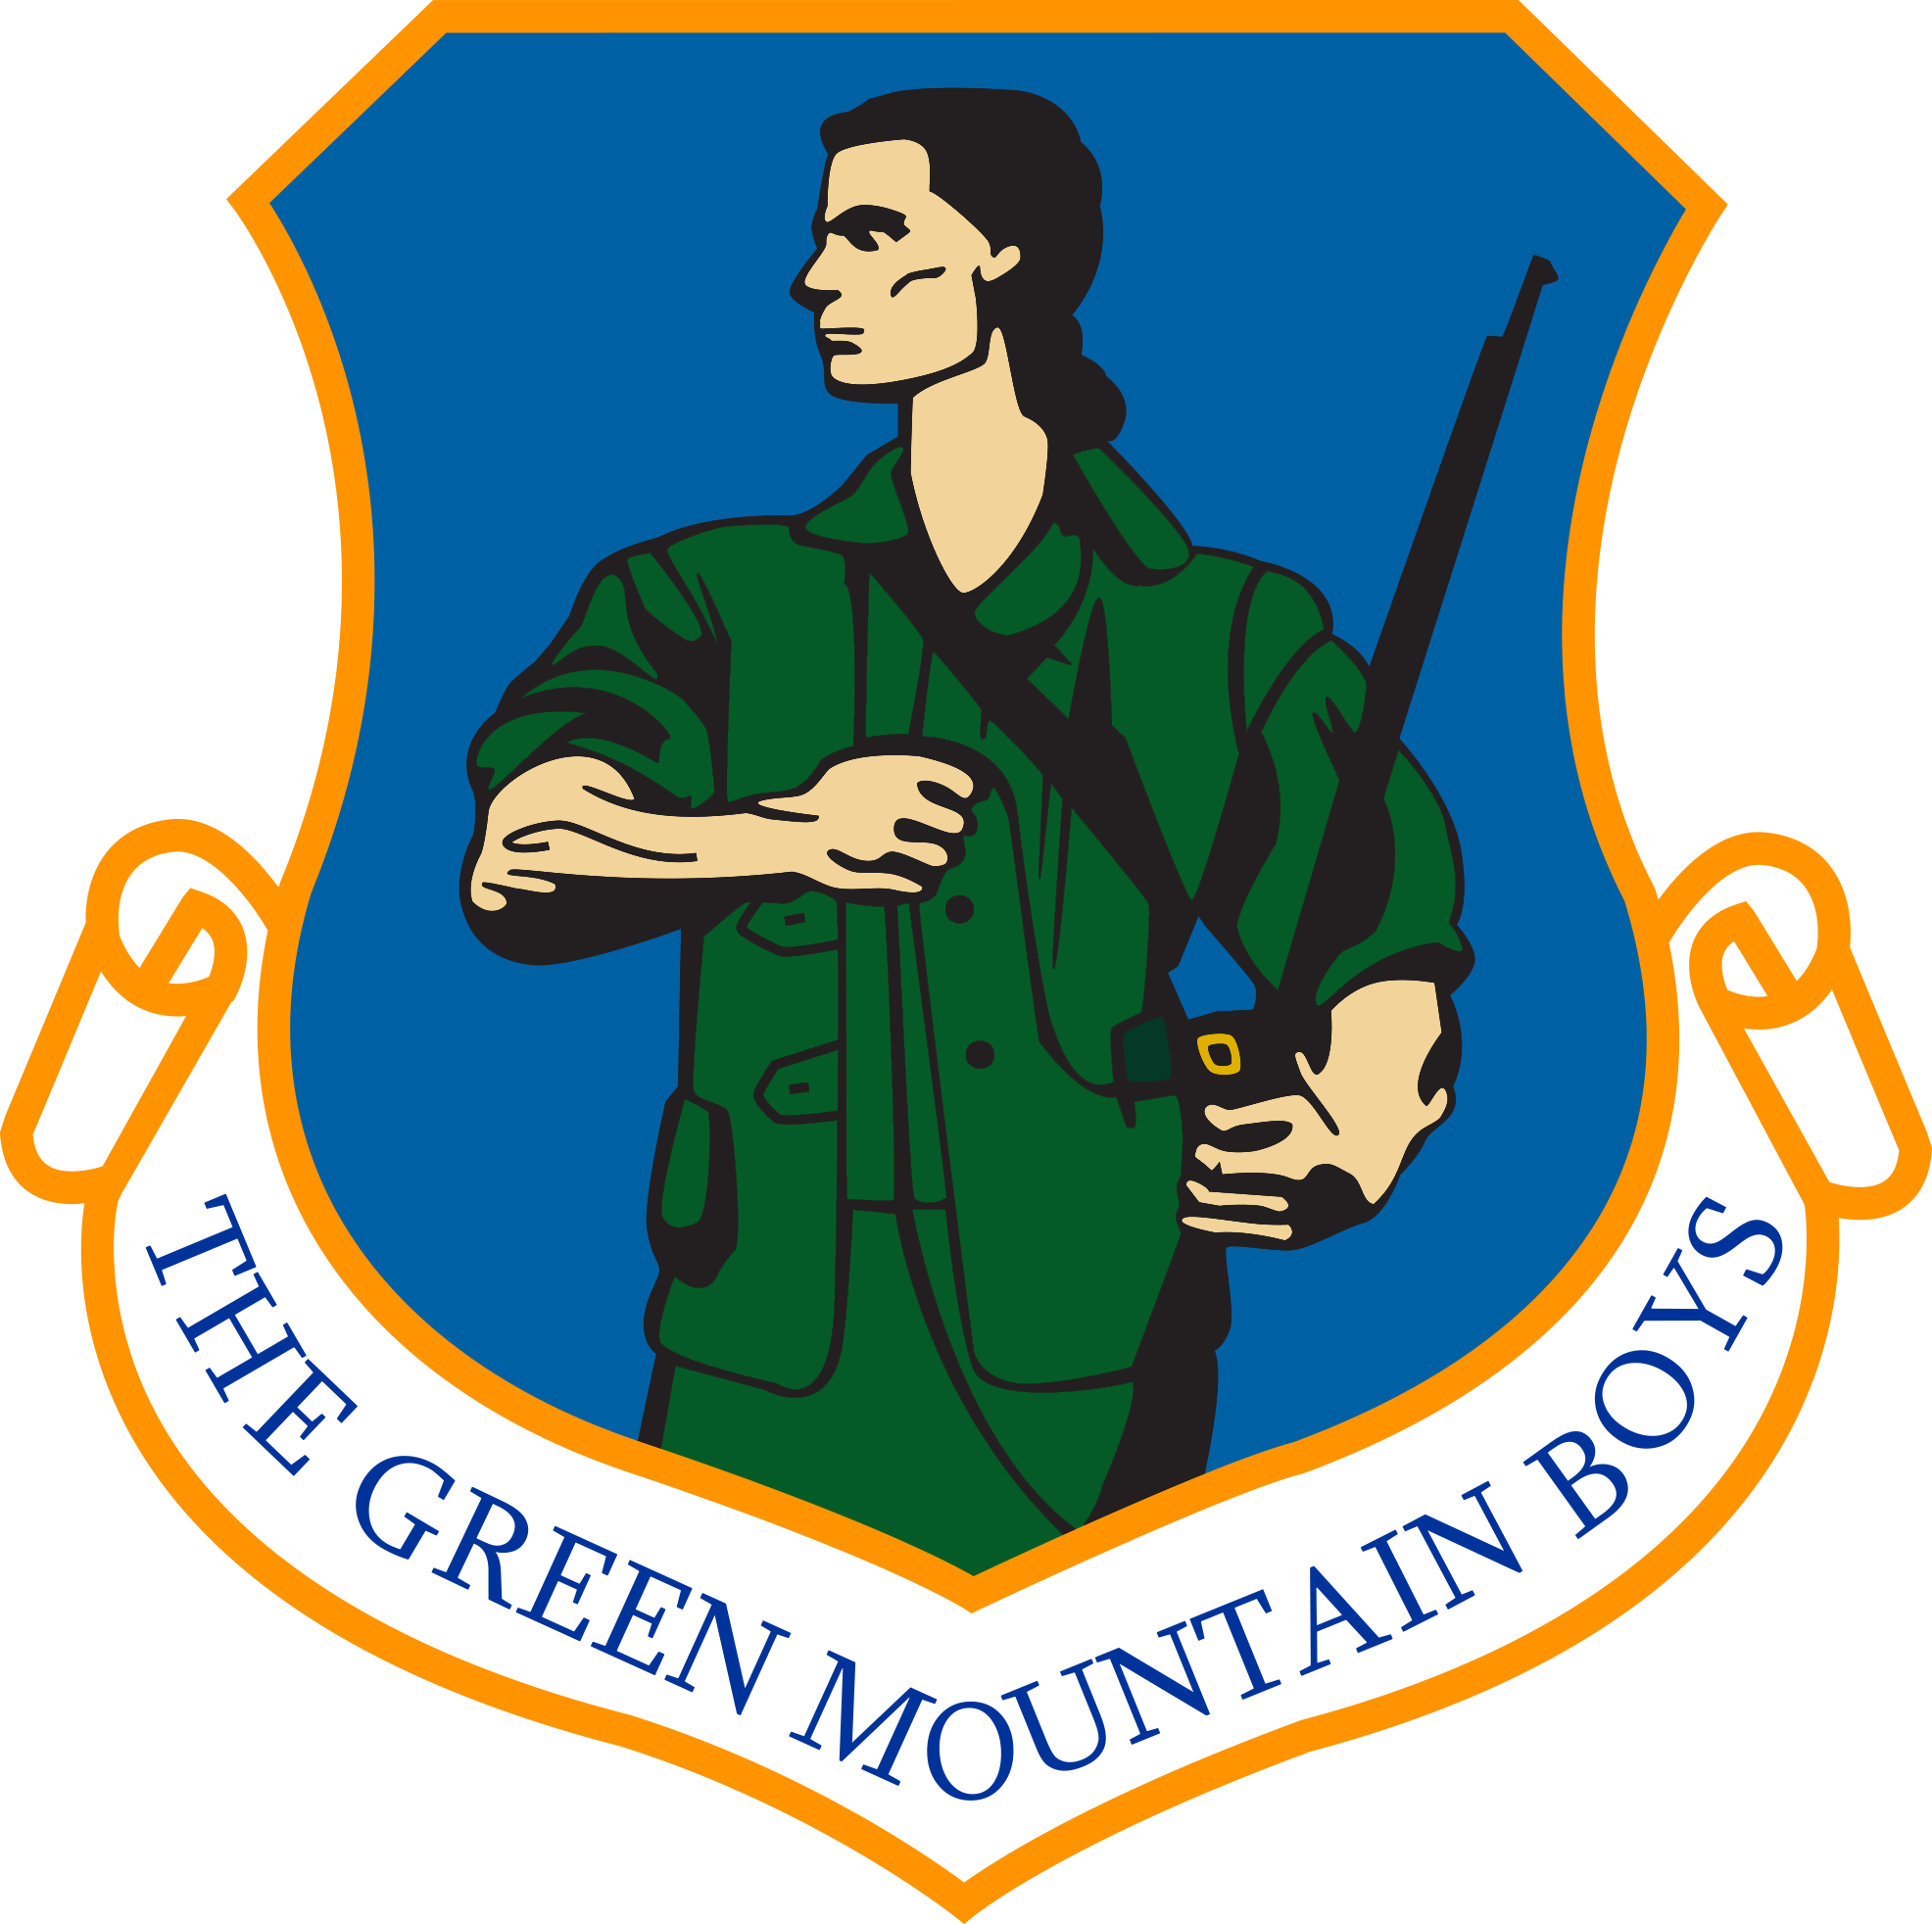 Official shield of the Green Mountain Boys